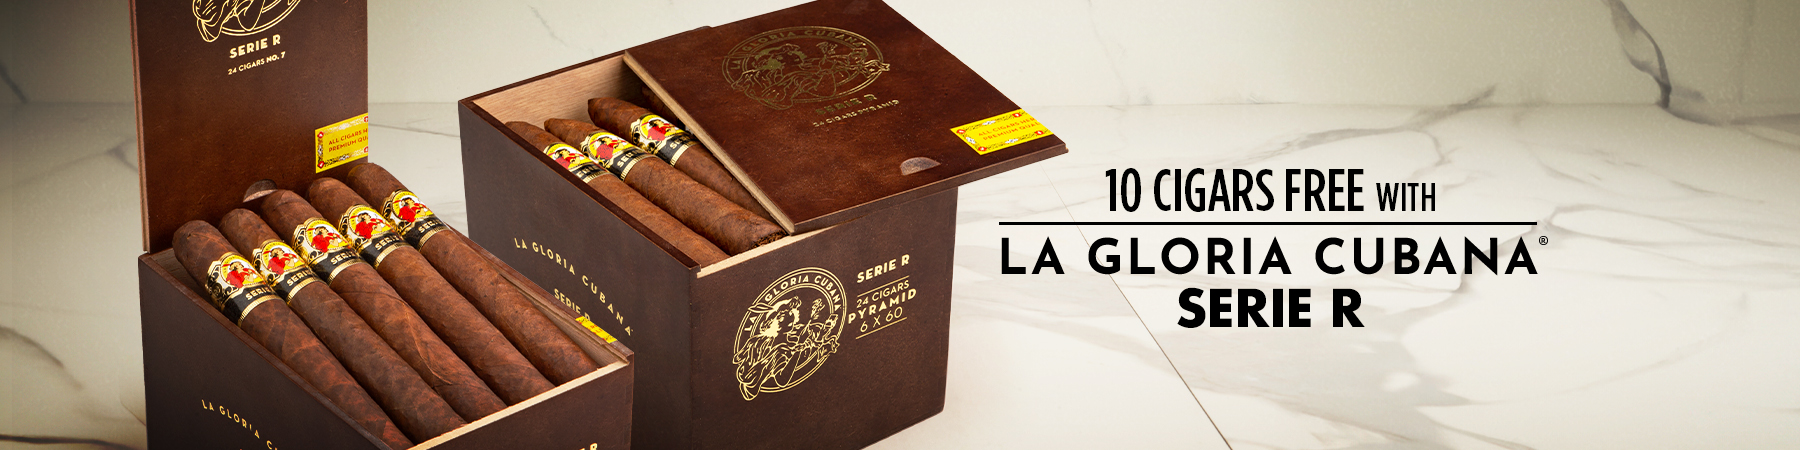 10 Cigars Free With La Gloria Cubana Serie R